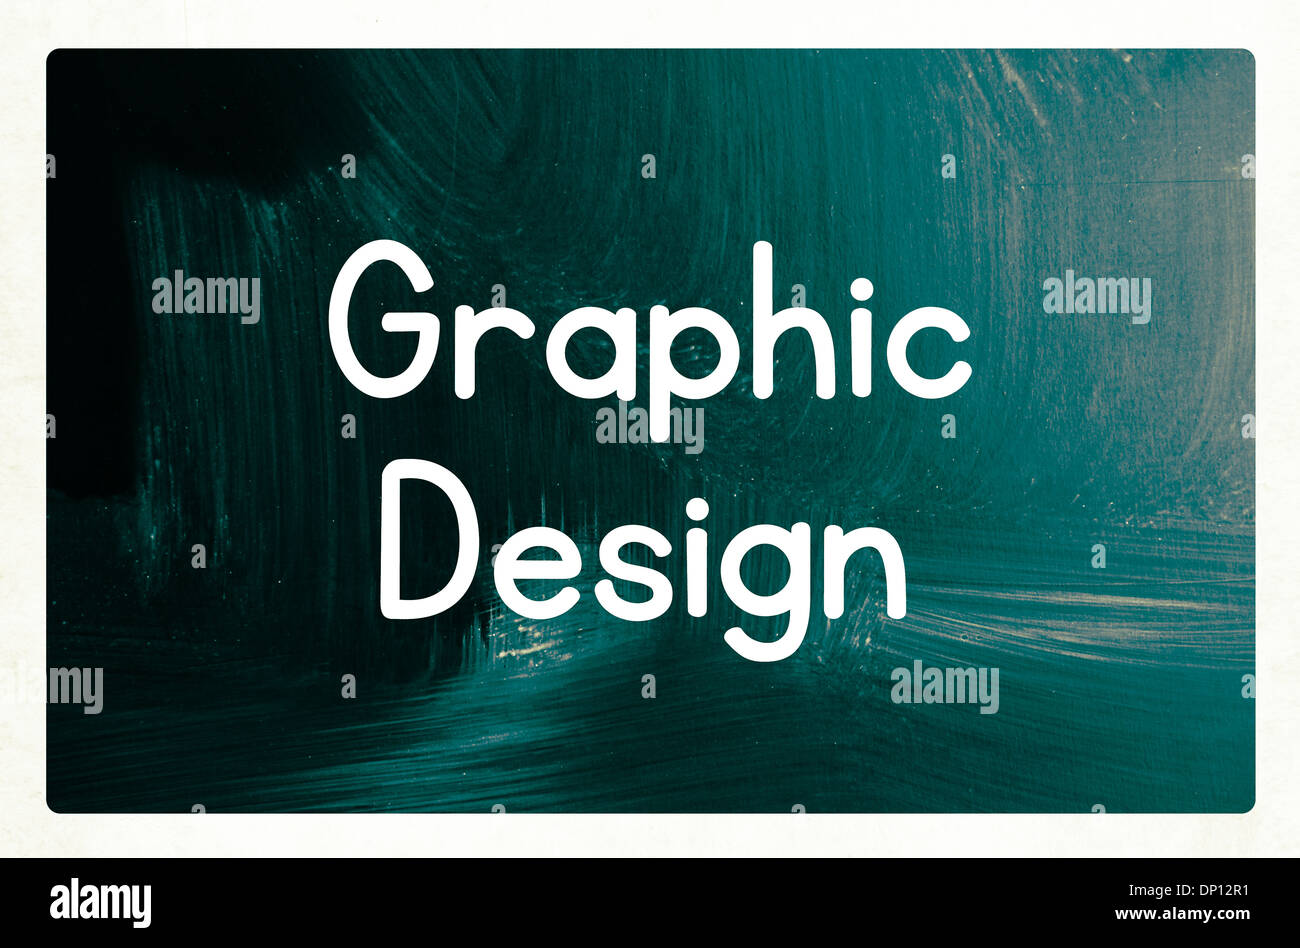 graphic design concept Stock Photo - Alamy